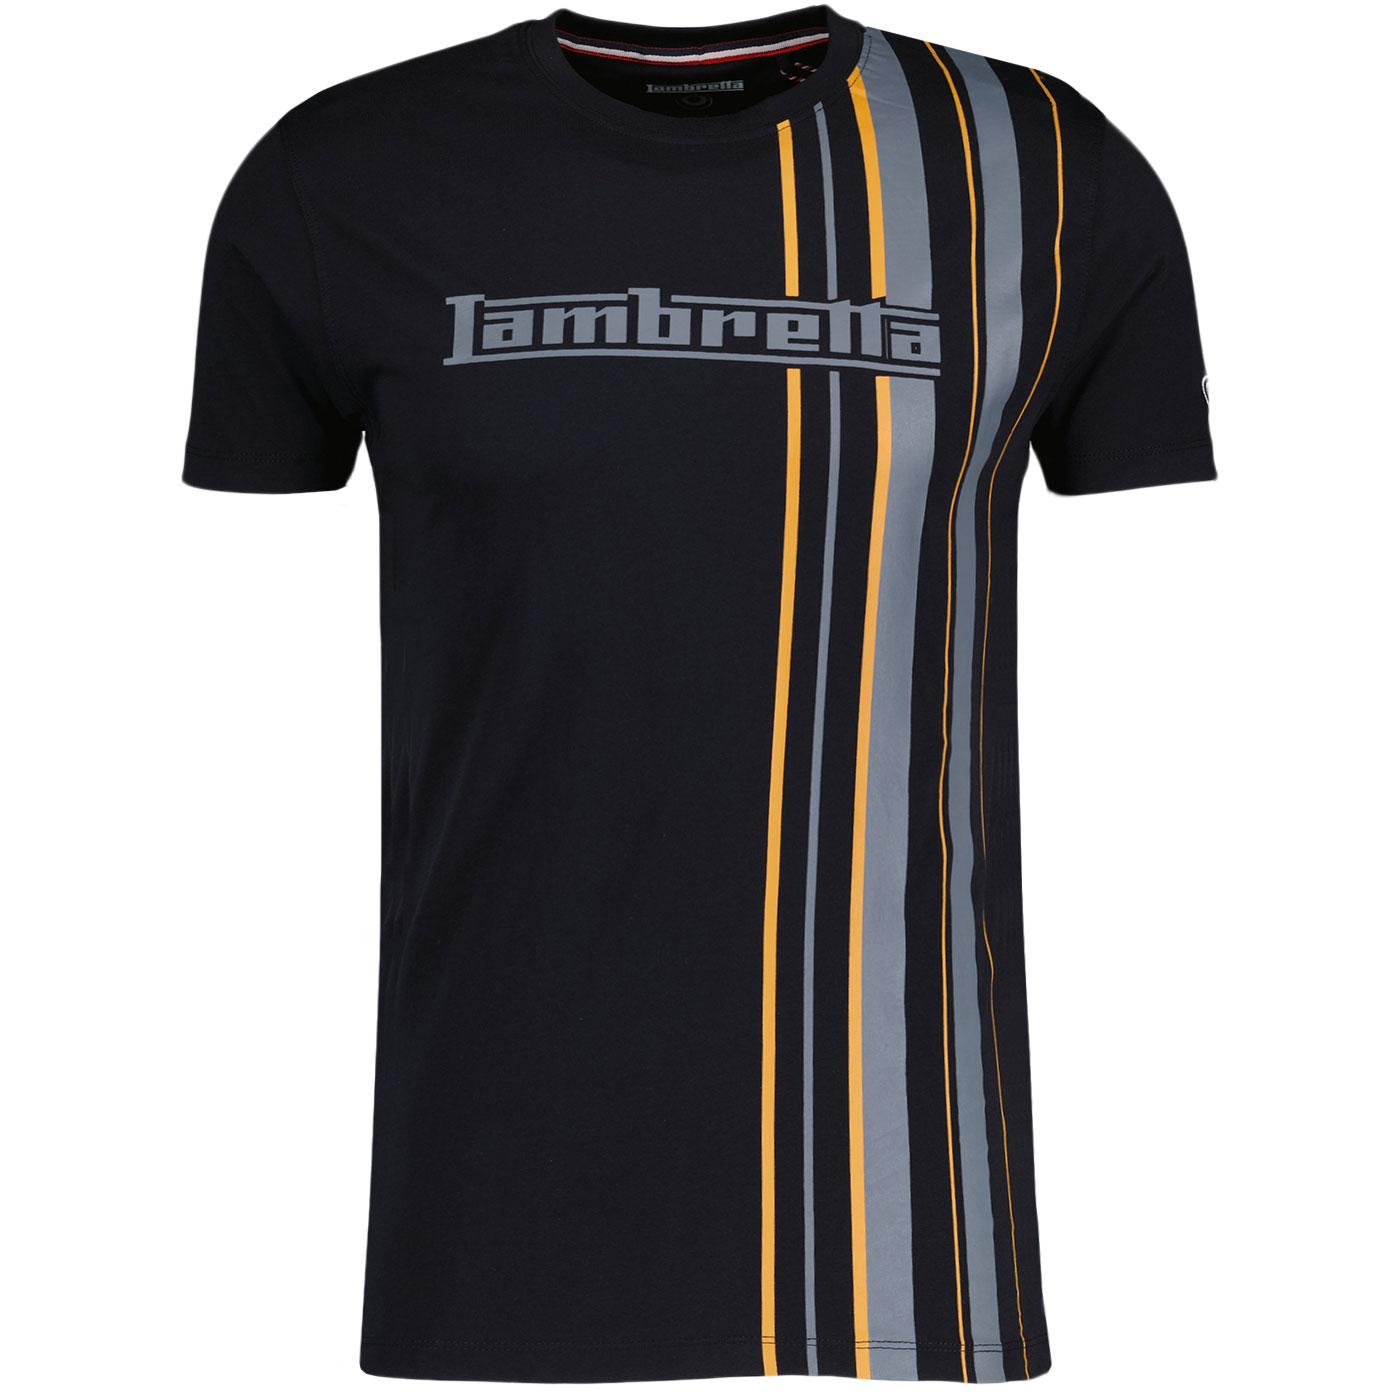 Lambretta Retro Racing Stripe Mod Crew T-shirt B